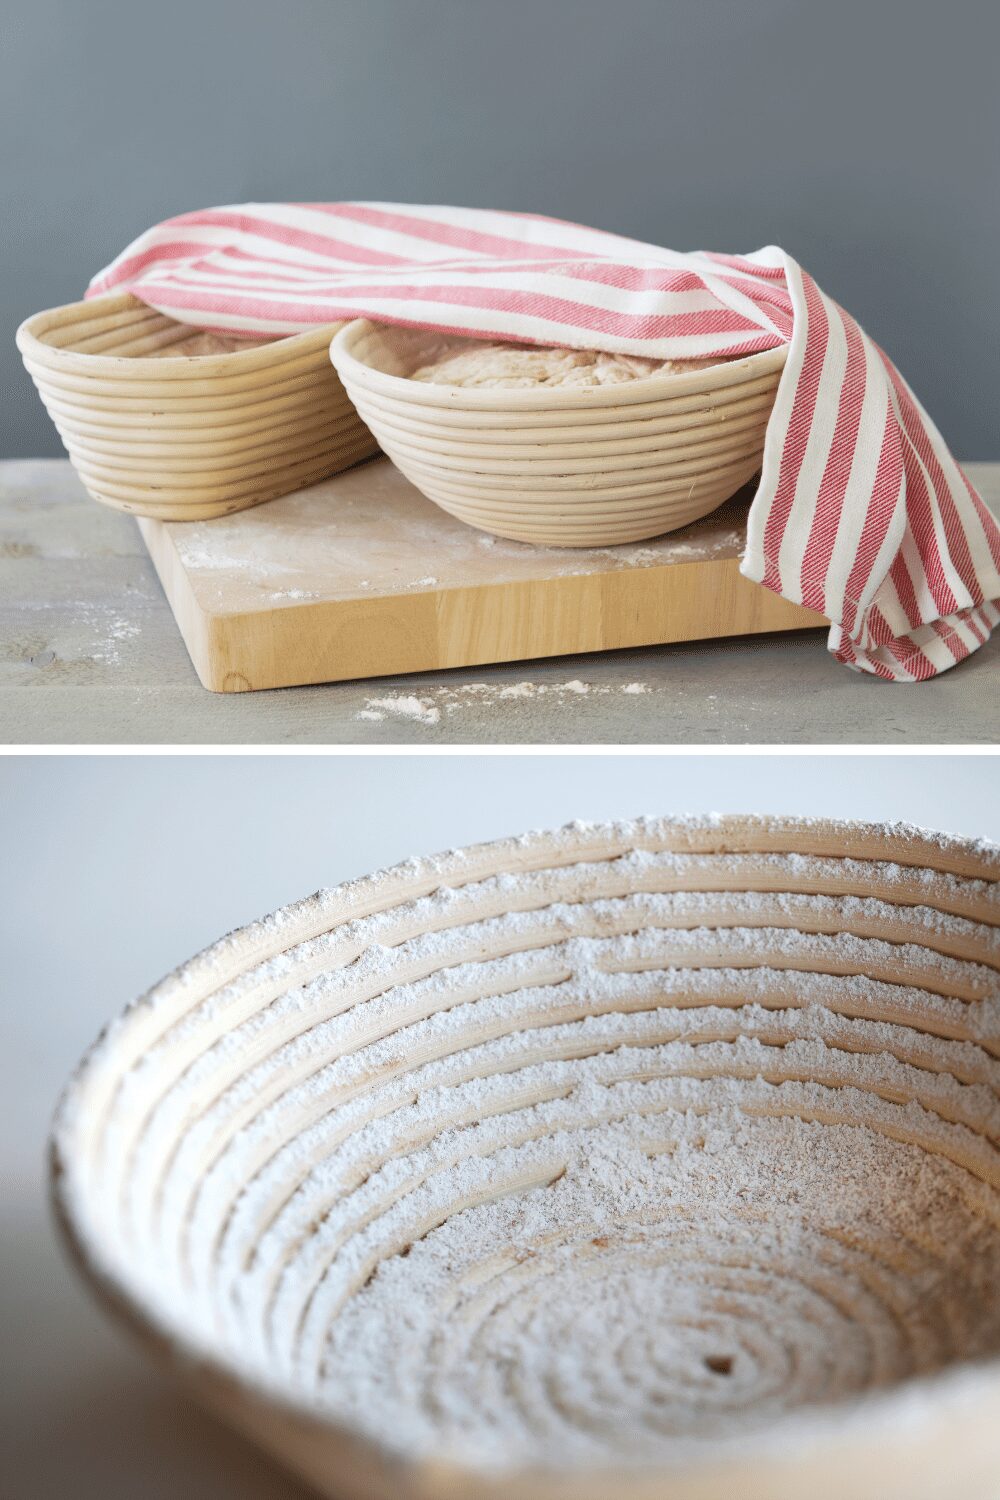 Bread Proofing Basket - Antique Bread Basket